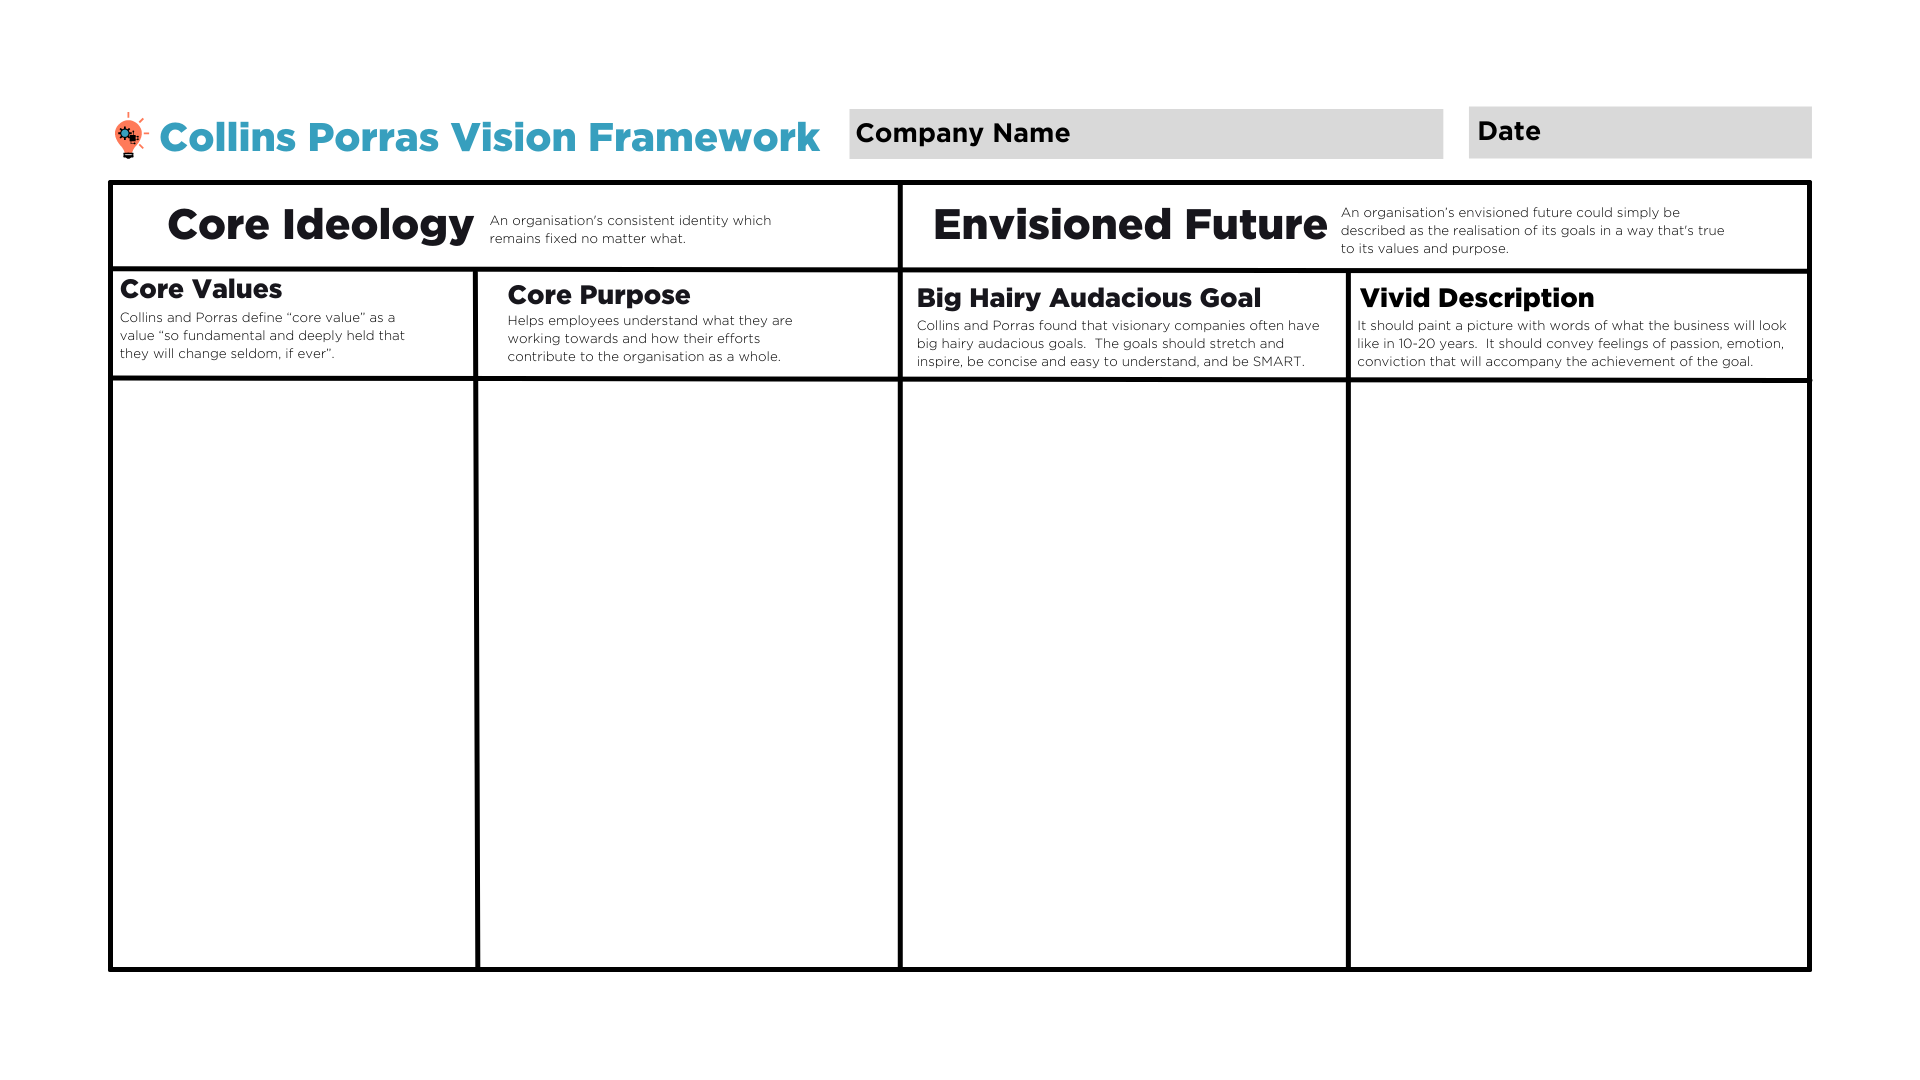 Collins Porras vision framework template